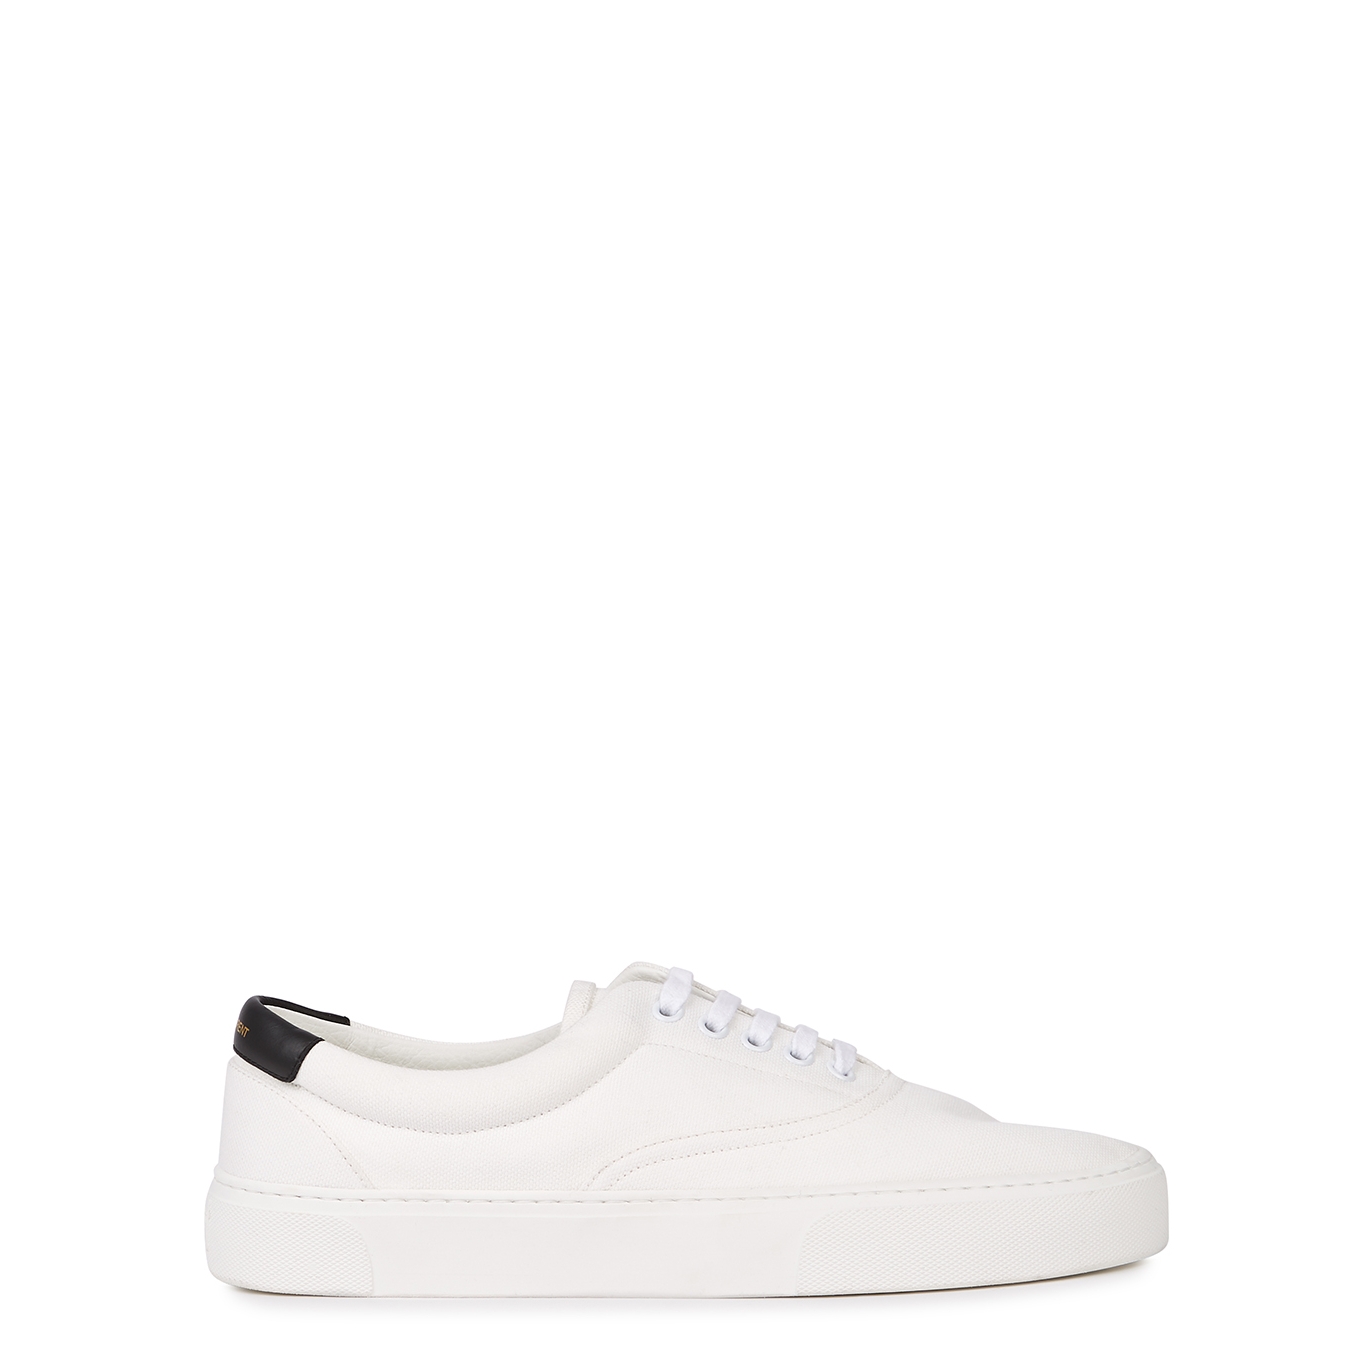 Saint Laurent Venice White Canvas Sneakers - Off White - 5